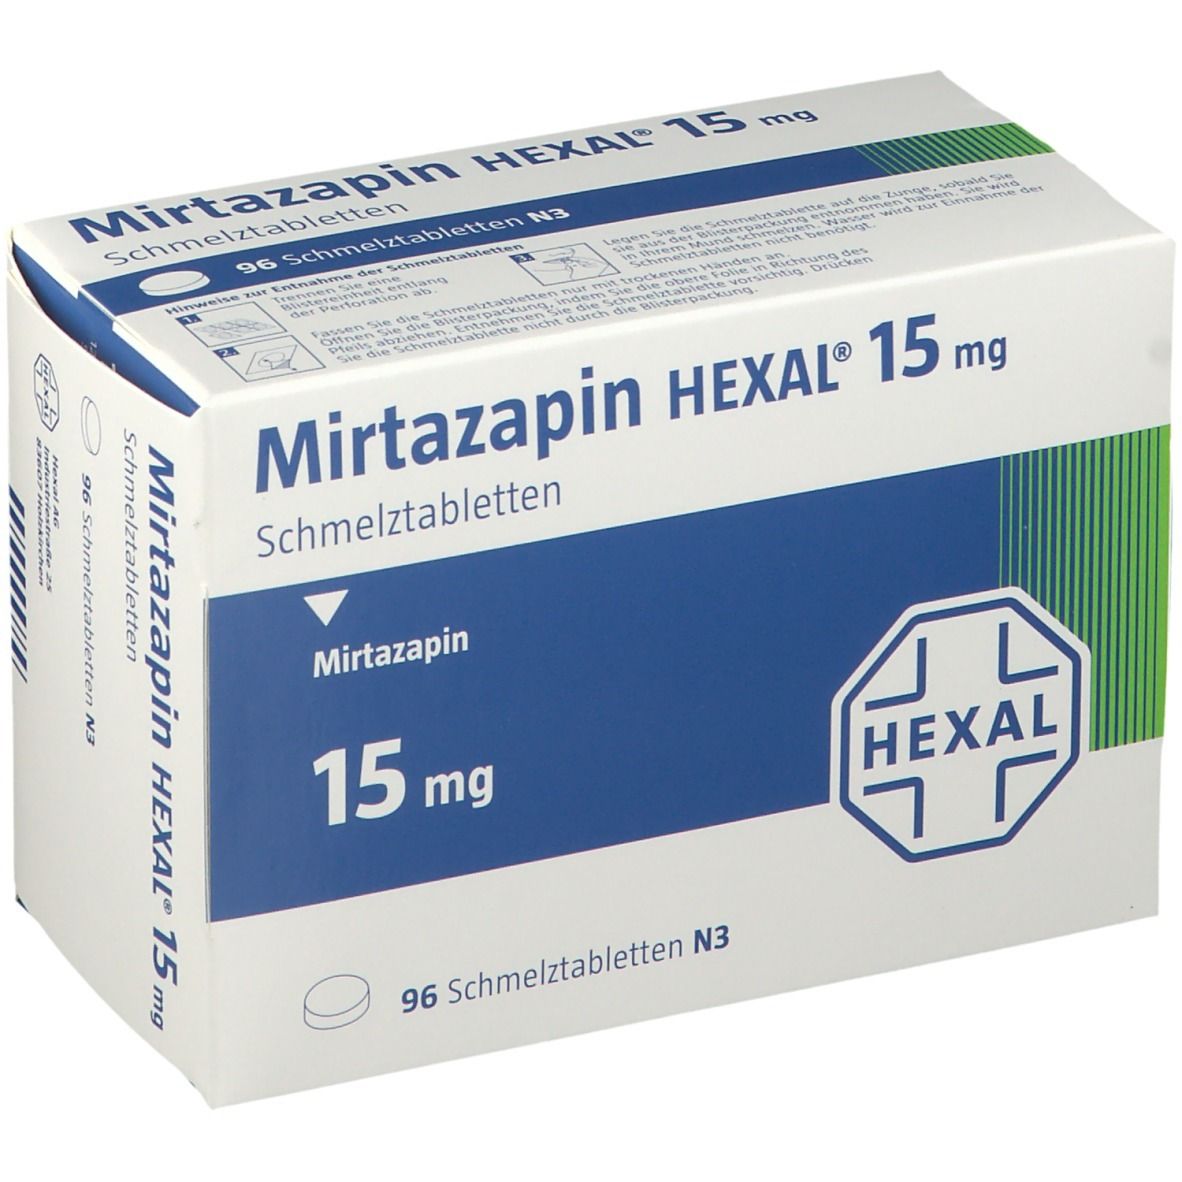 Mirtazapin HEXAL® 15 mg